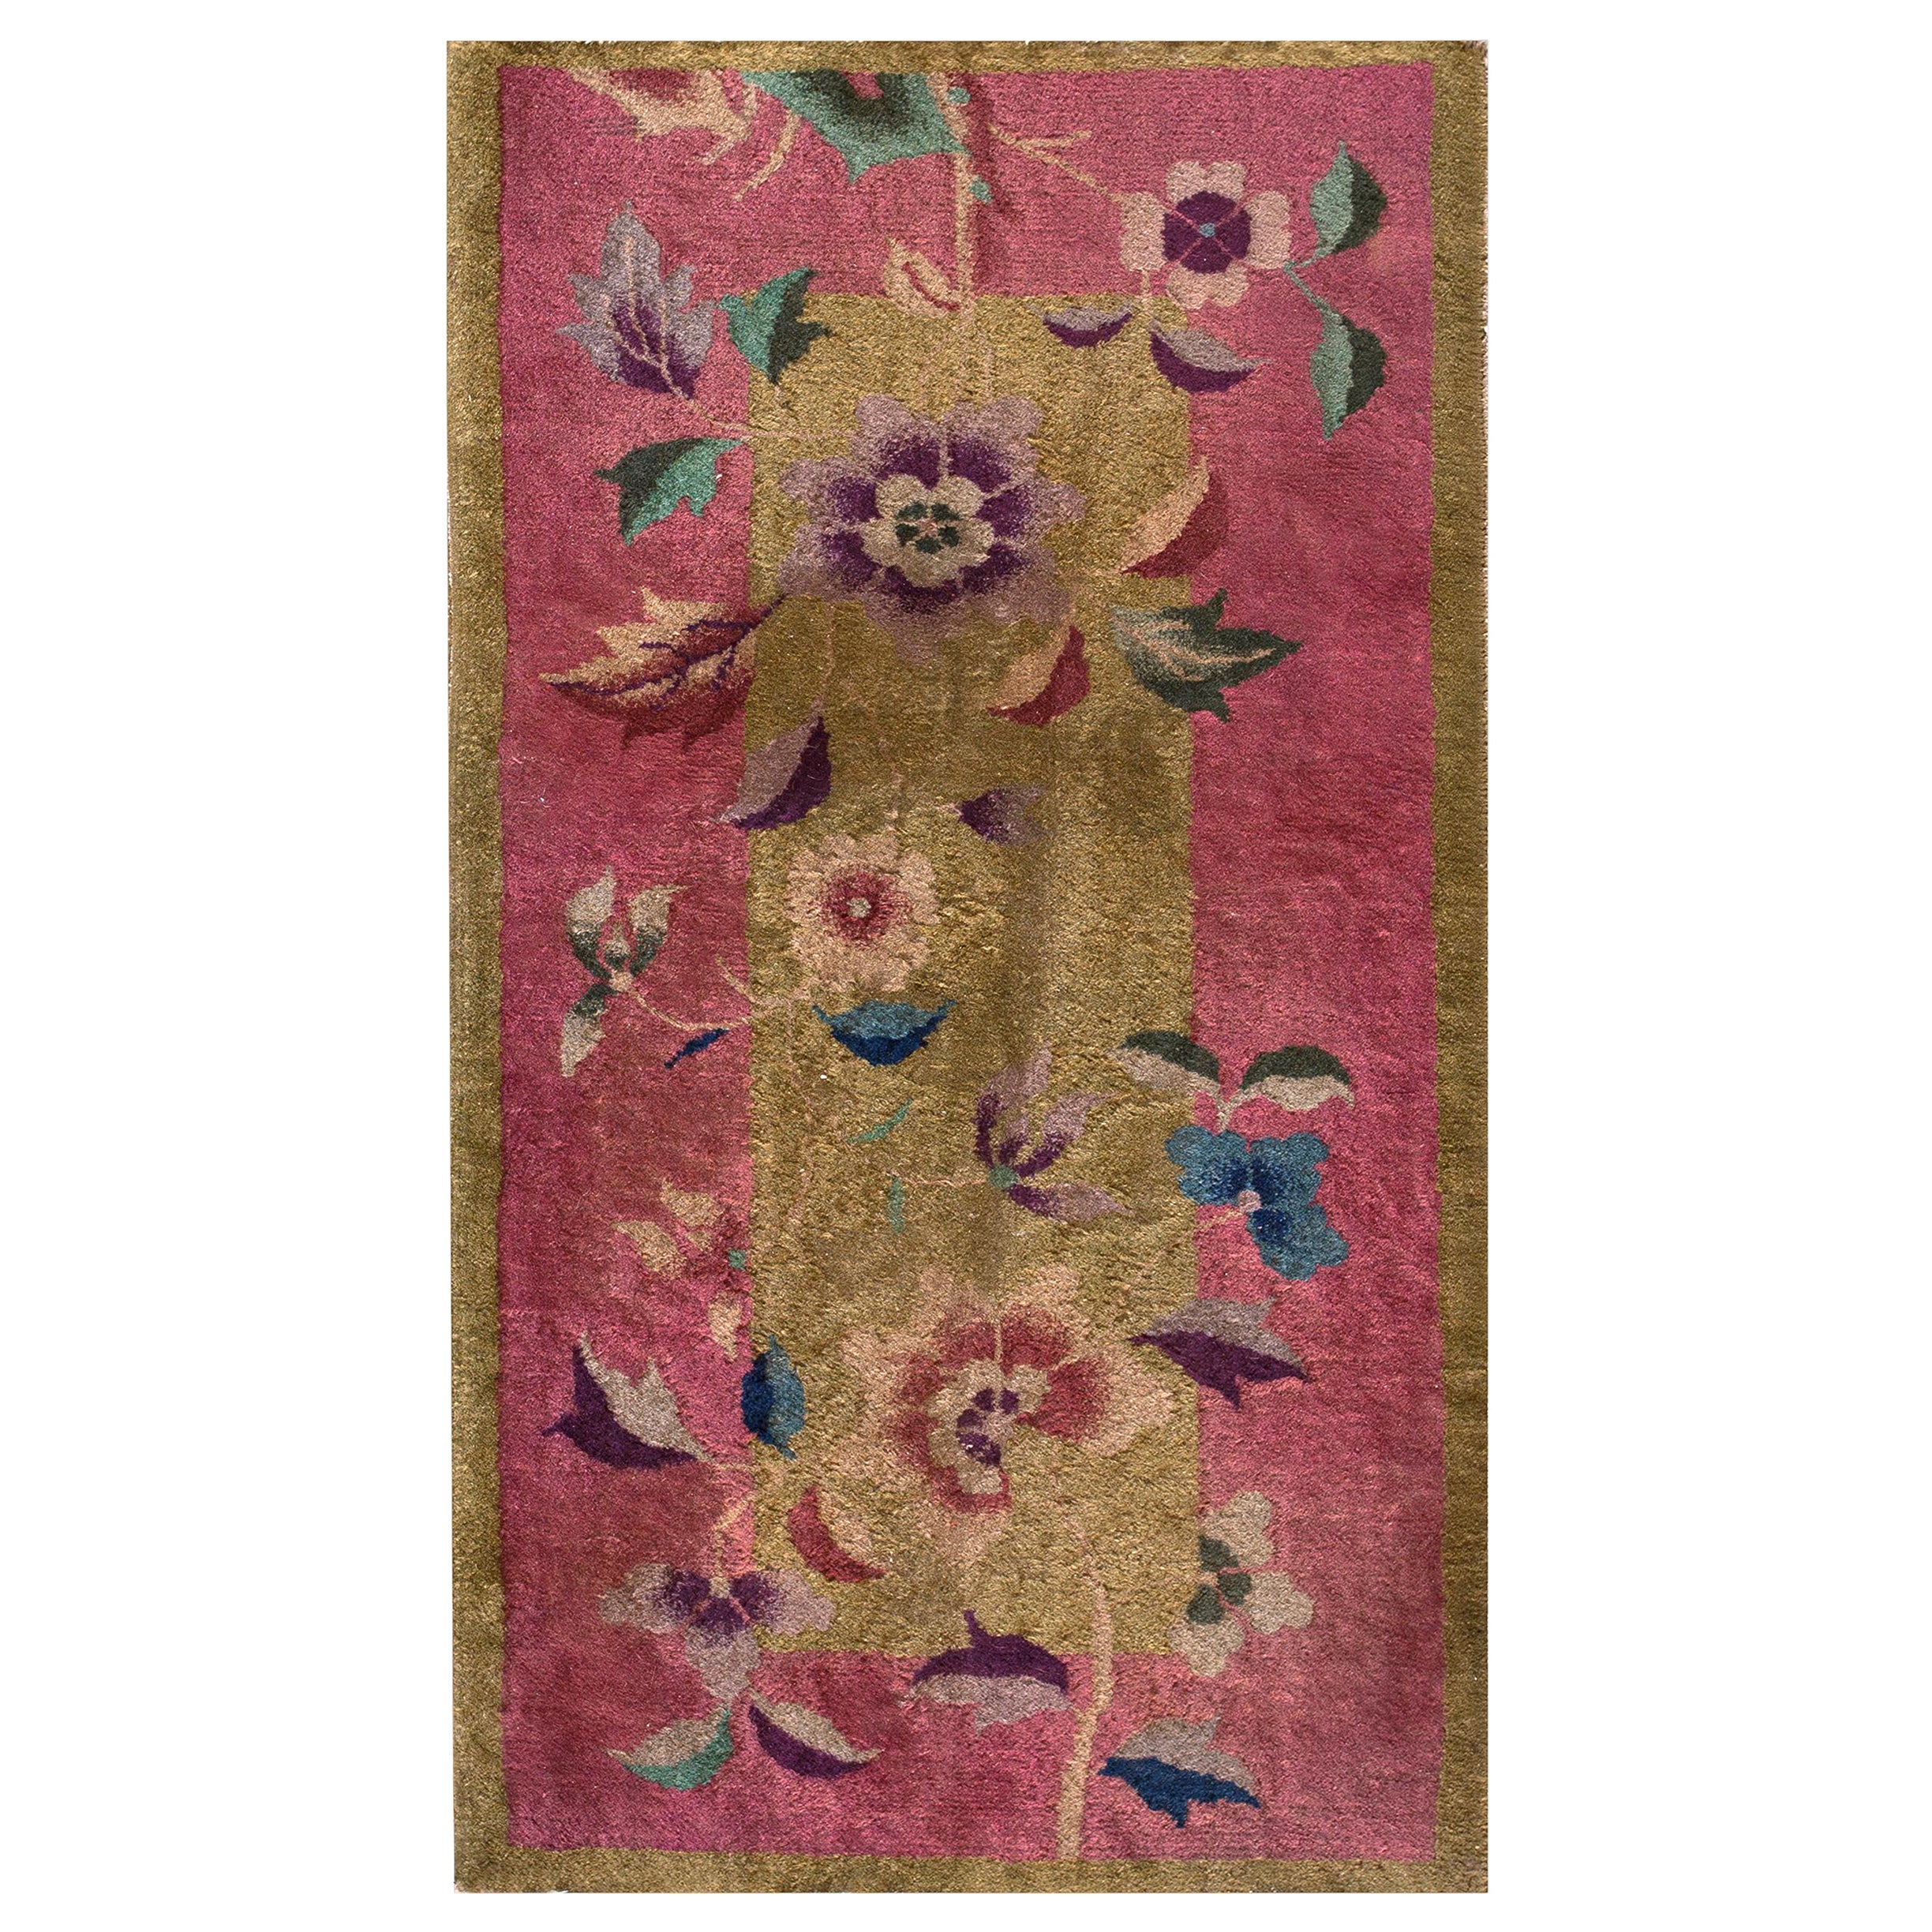 1920s Chinese Art Deco Carpet ( 2' 2" x 3' 9" - 66 x 114 cm ) For Sale